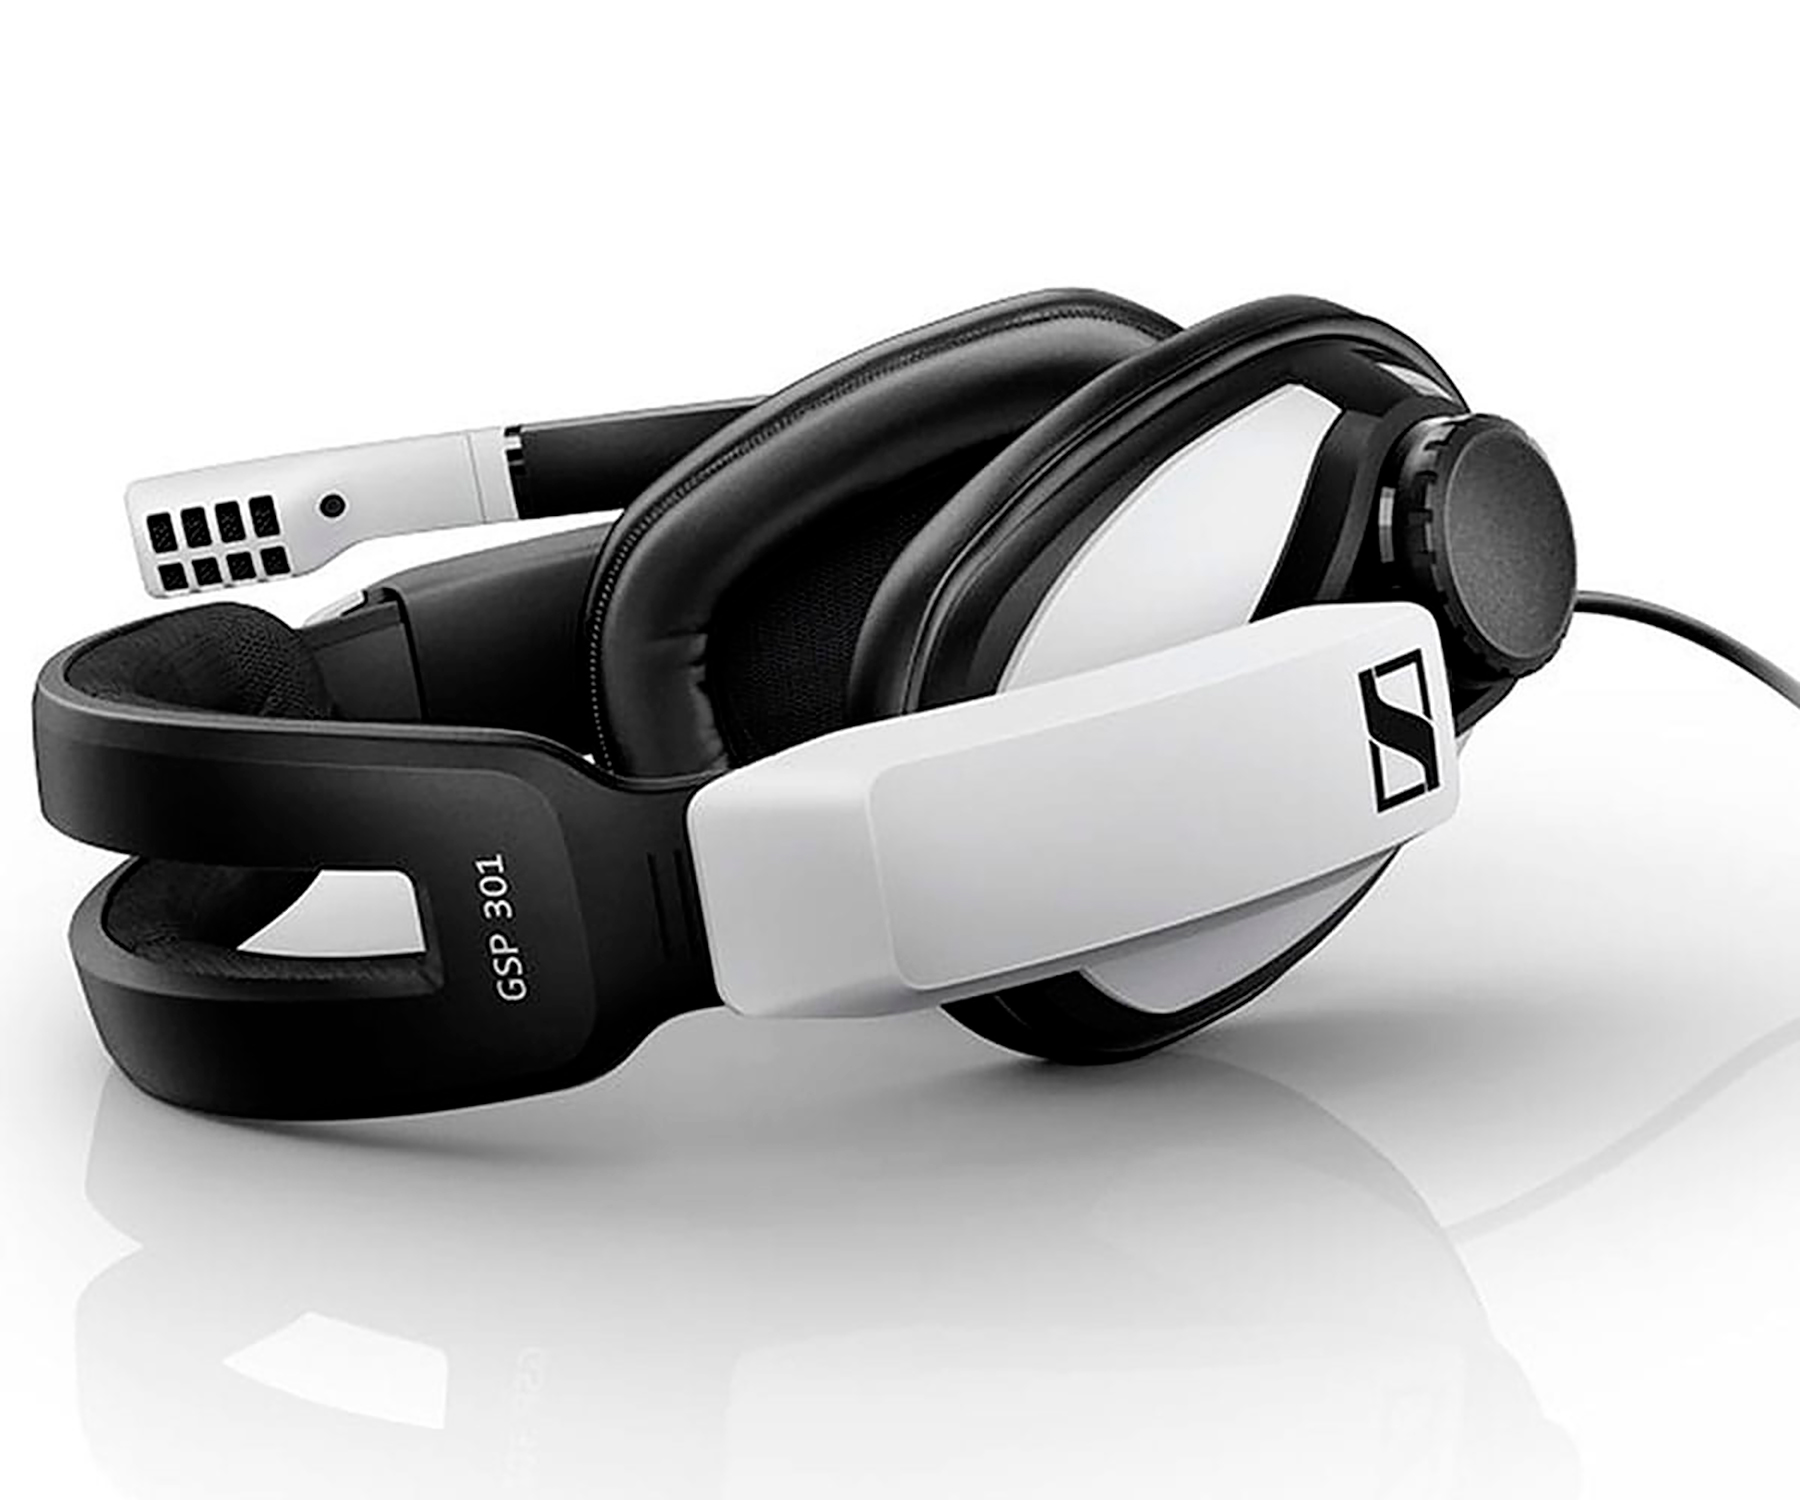 SENNHEISER GSP 301 WEISS, Gaming Headset Weiß Over-ear